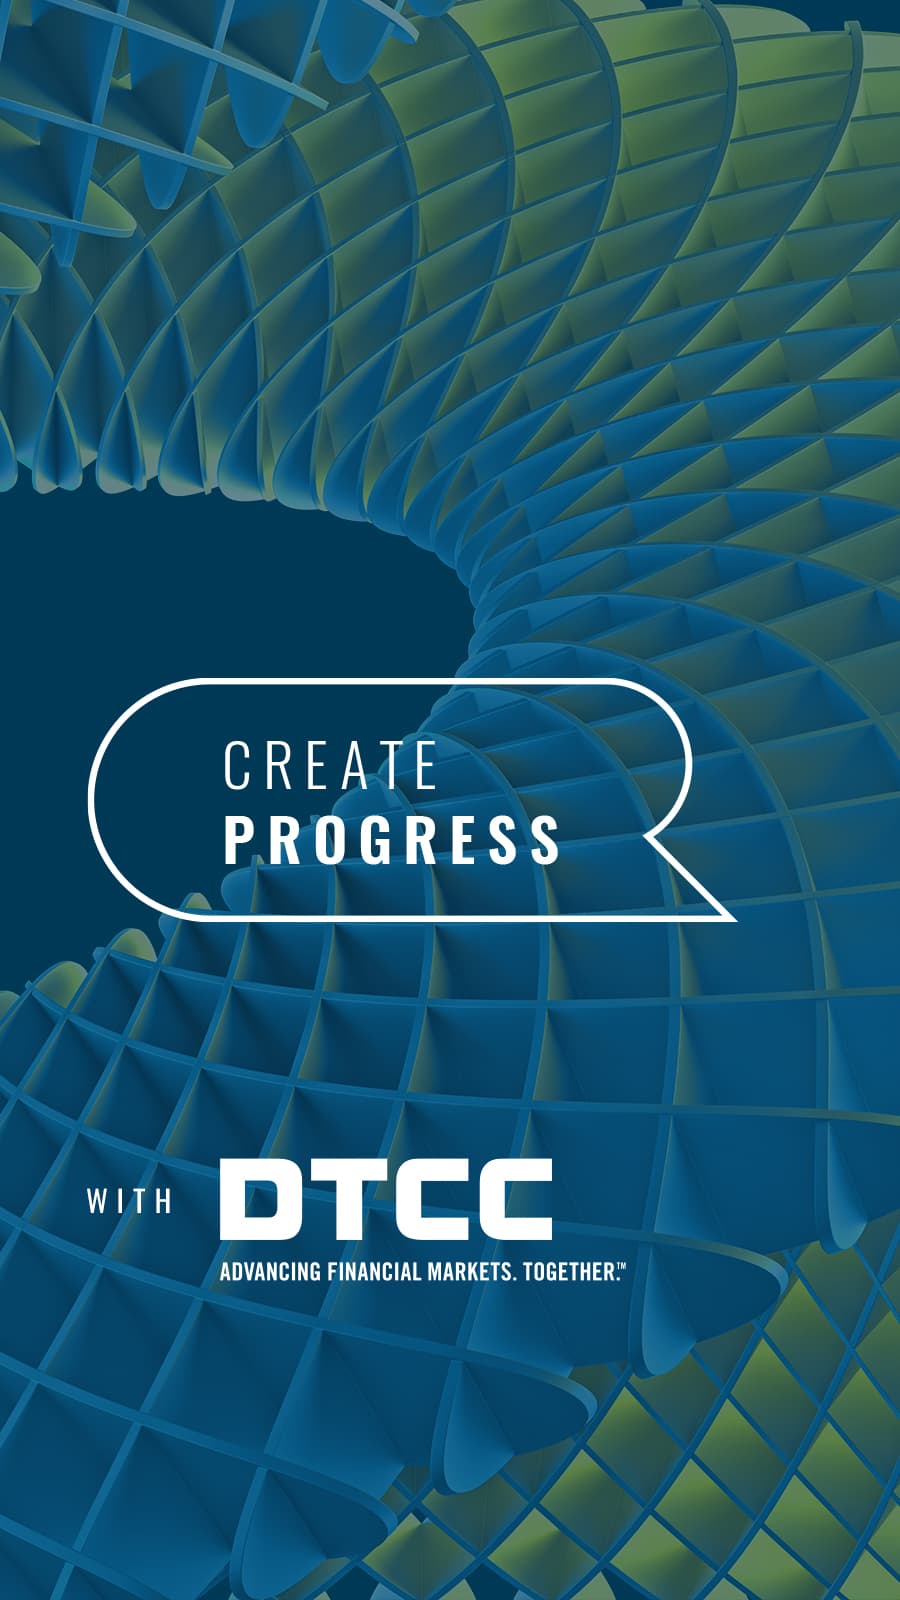 Create Progress with DTCC